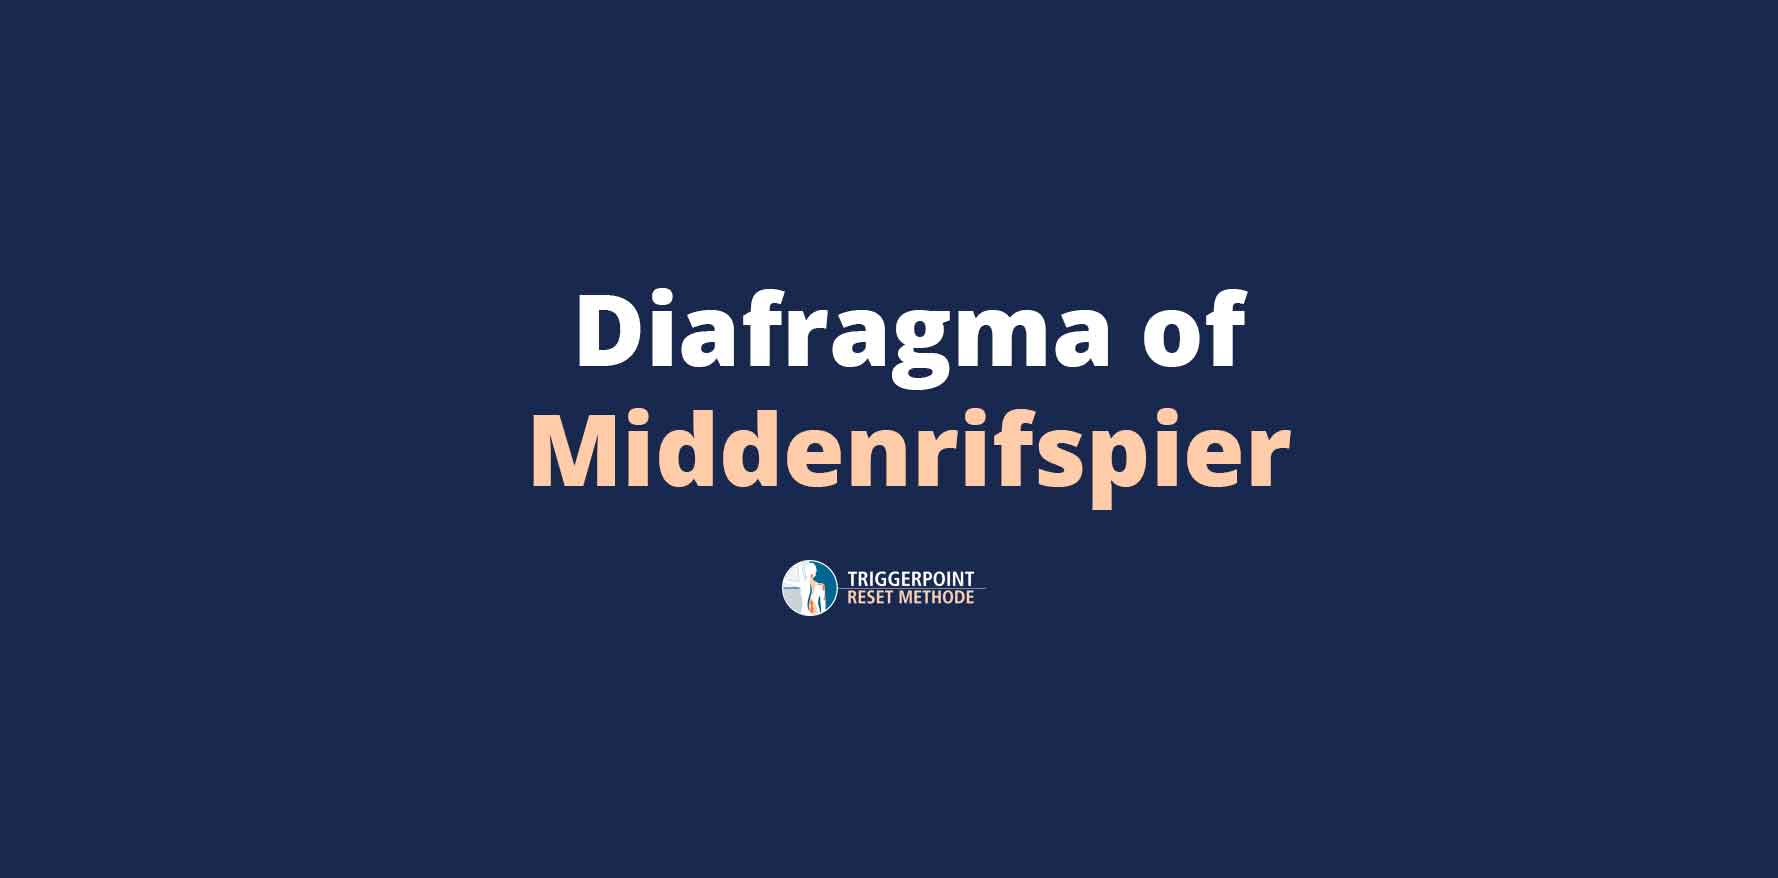 Diafragma of Middenrifspier